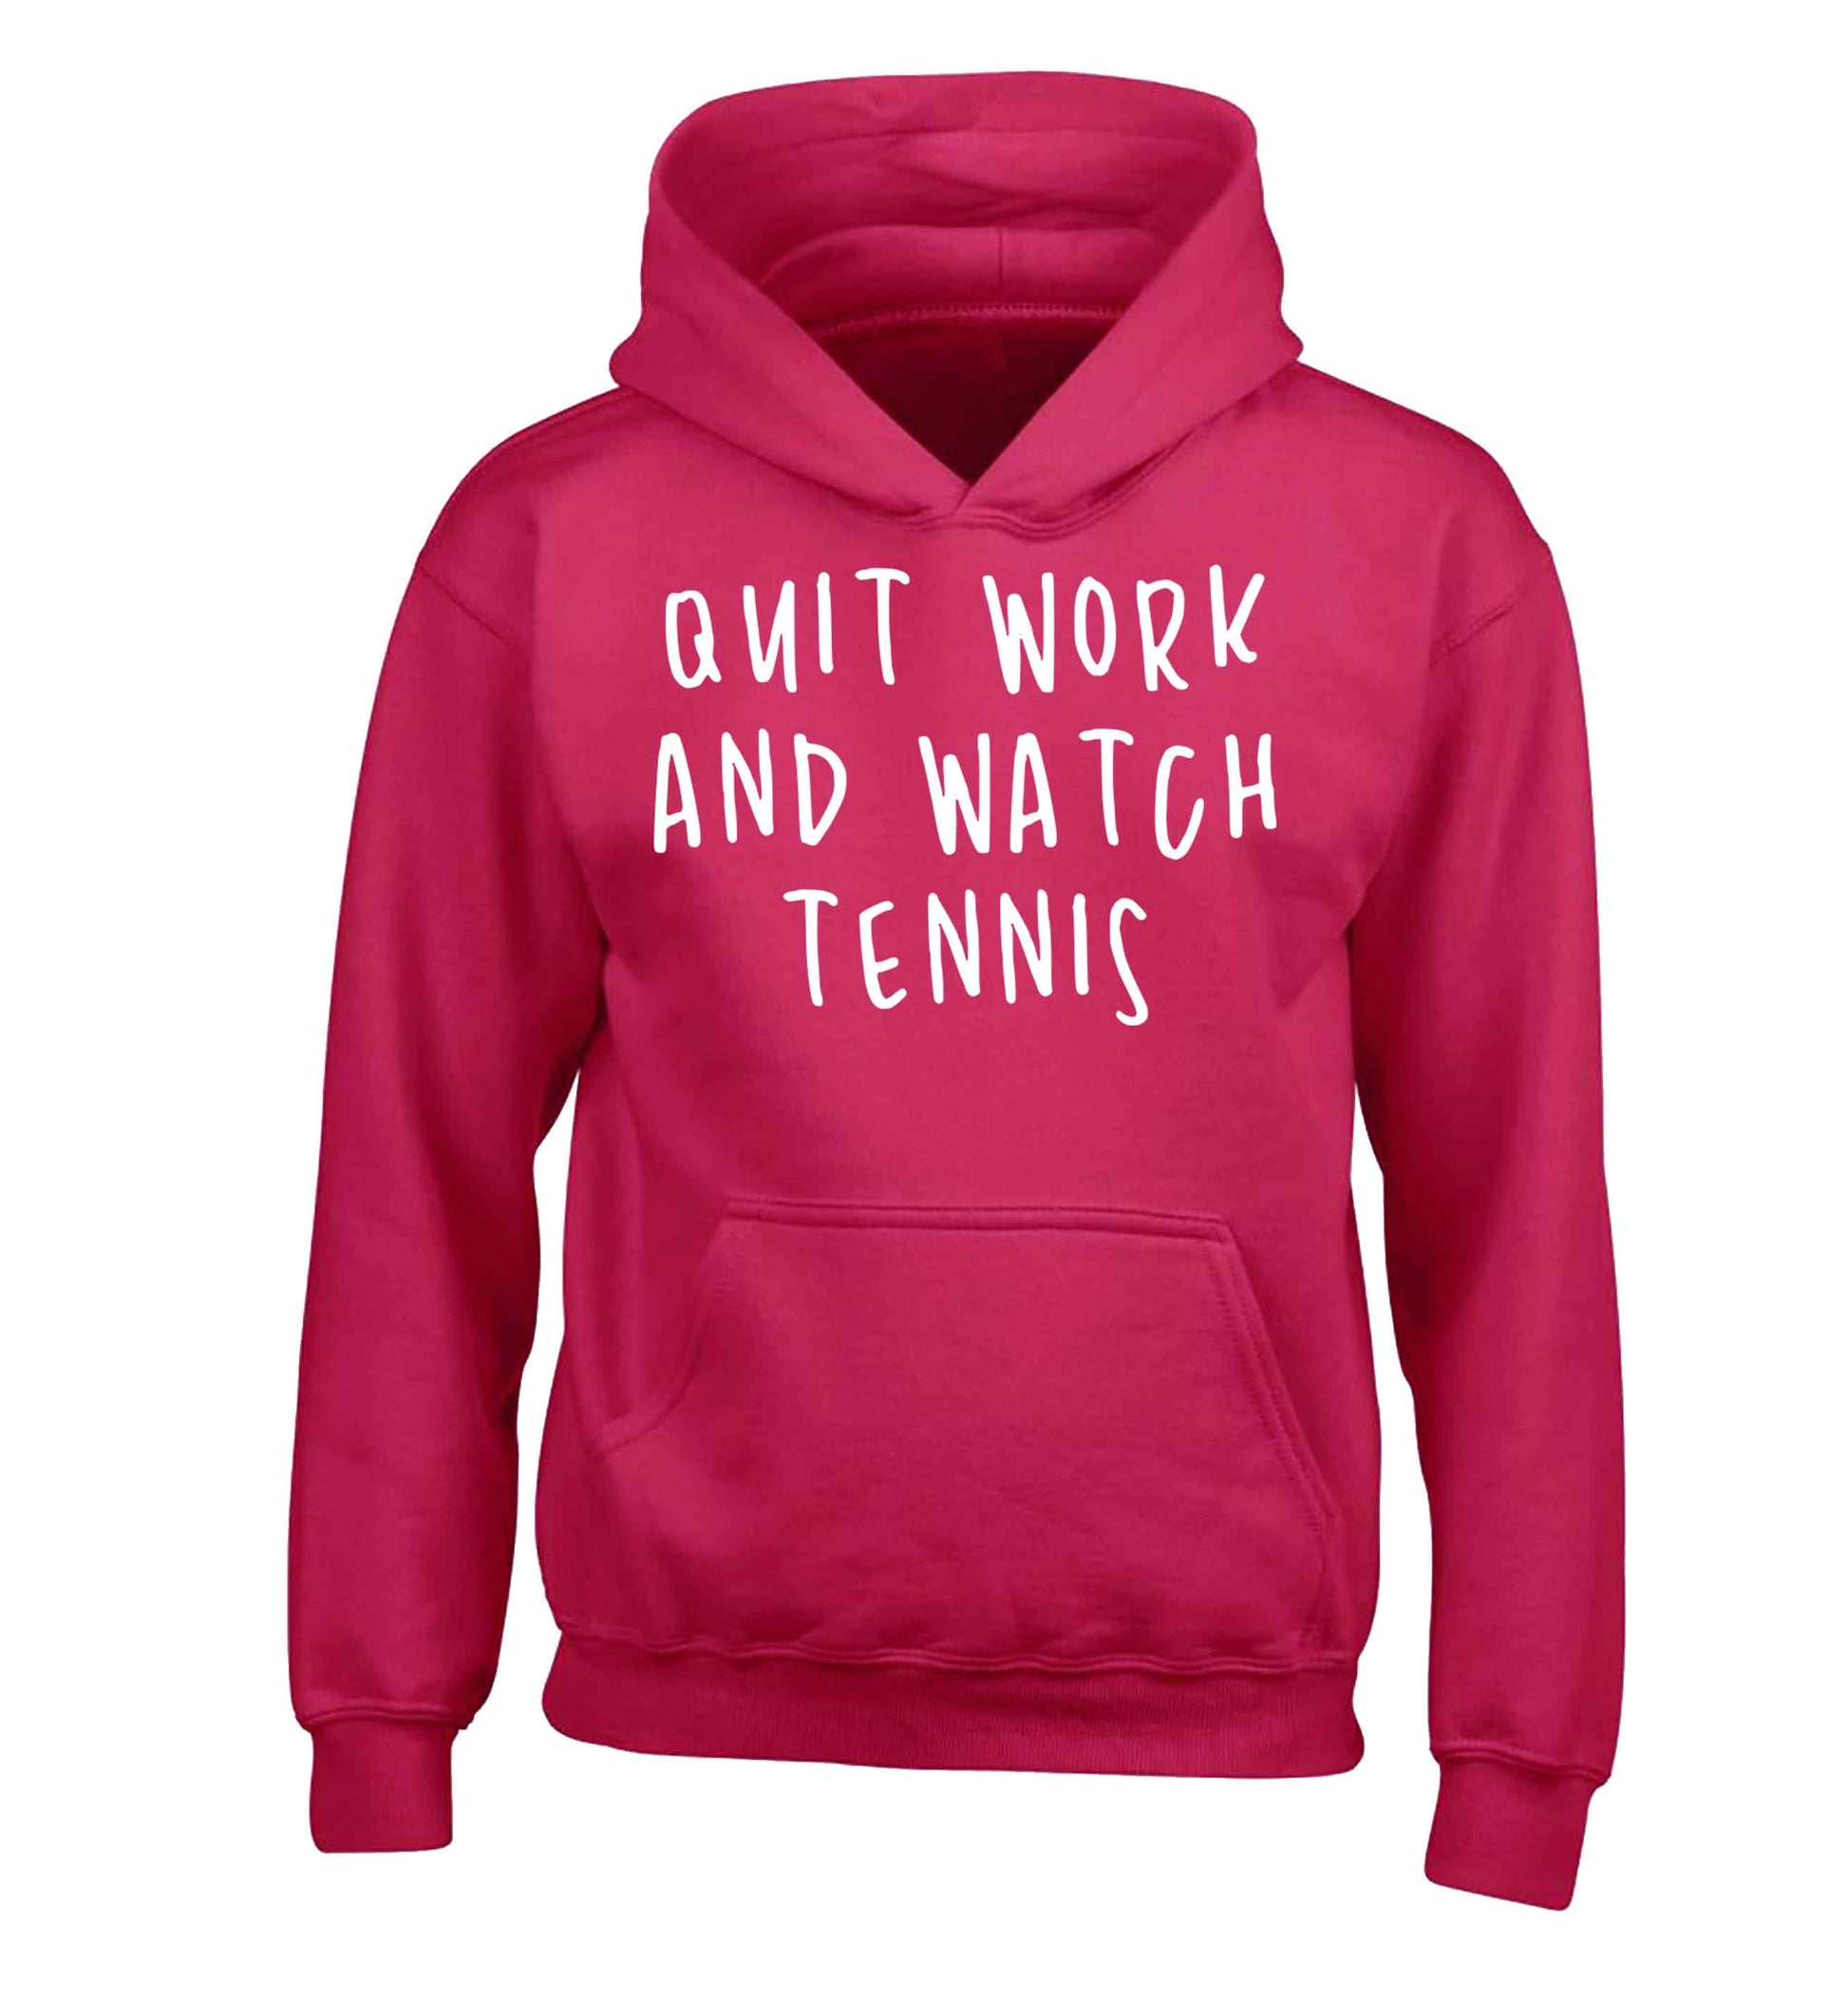 Quit work and watch tennis children's pink hoodie 12-13 Years